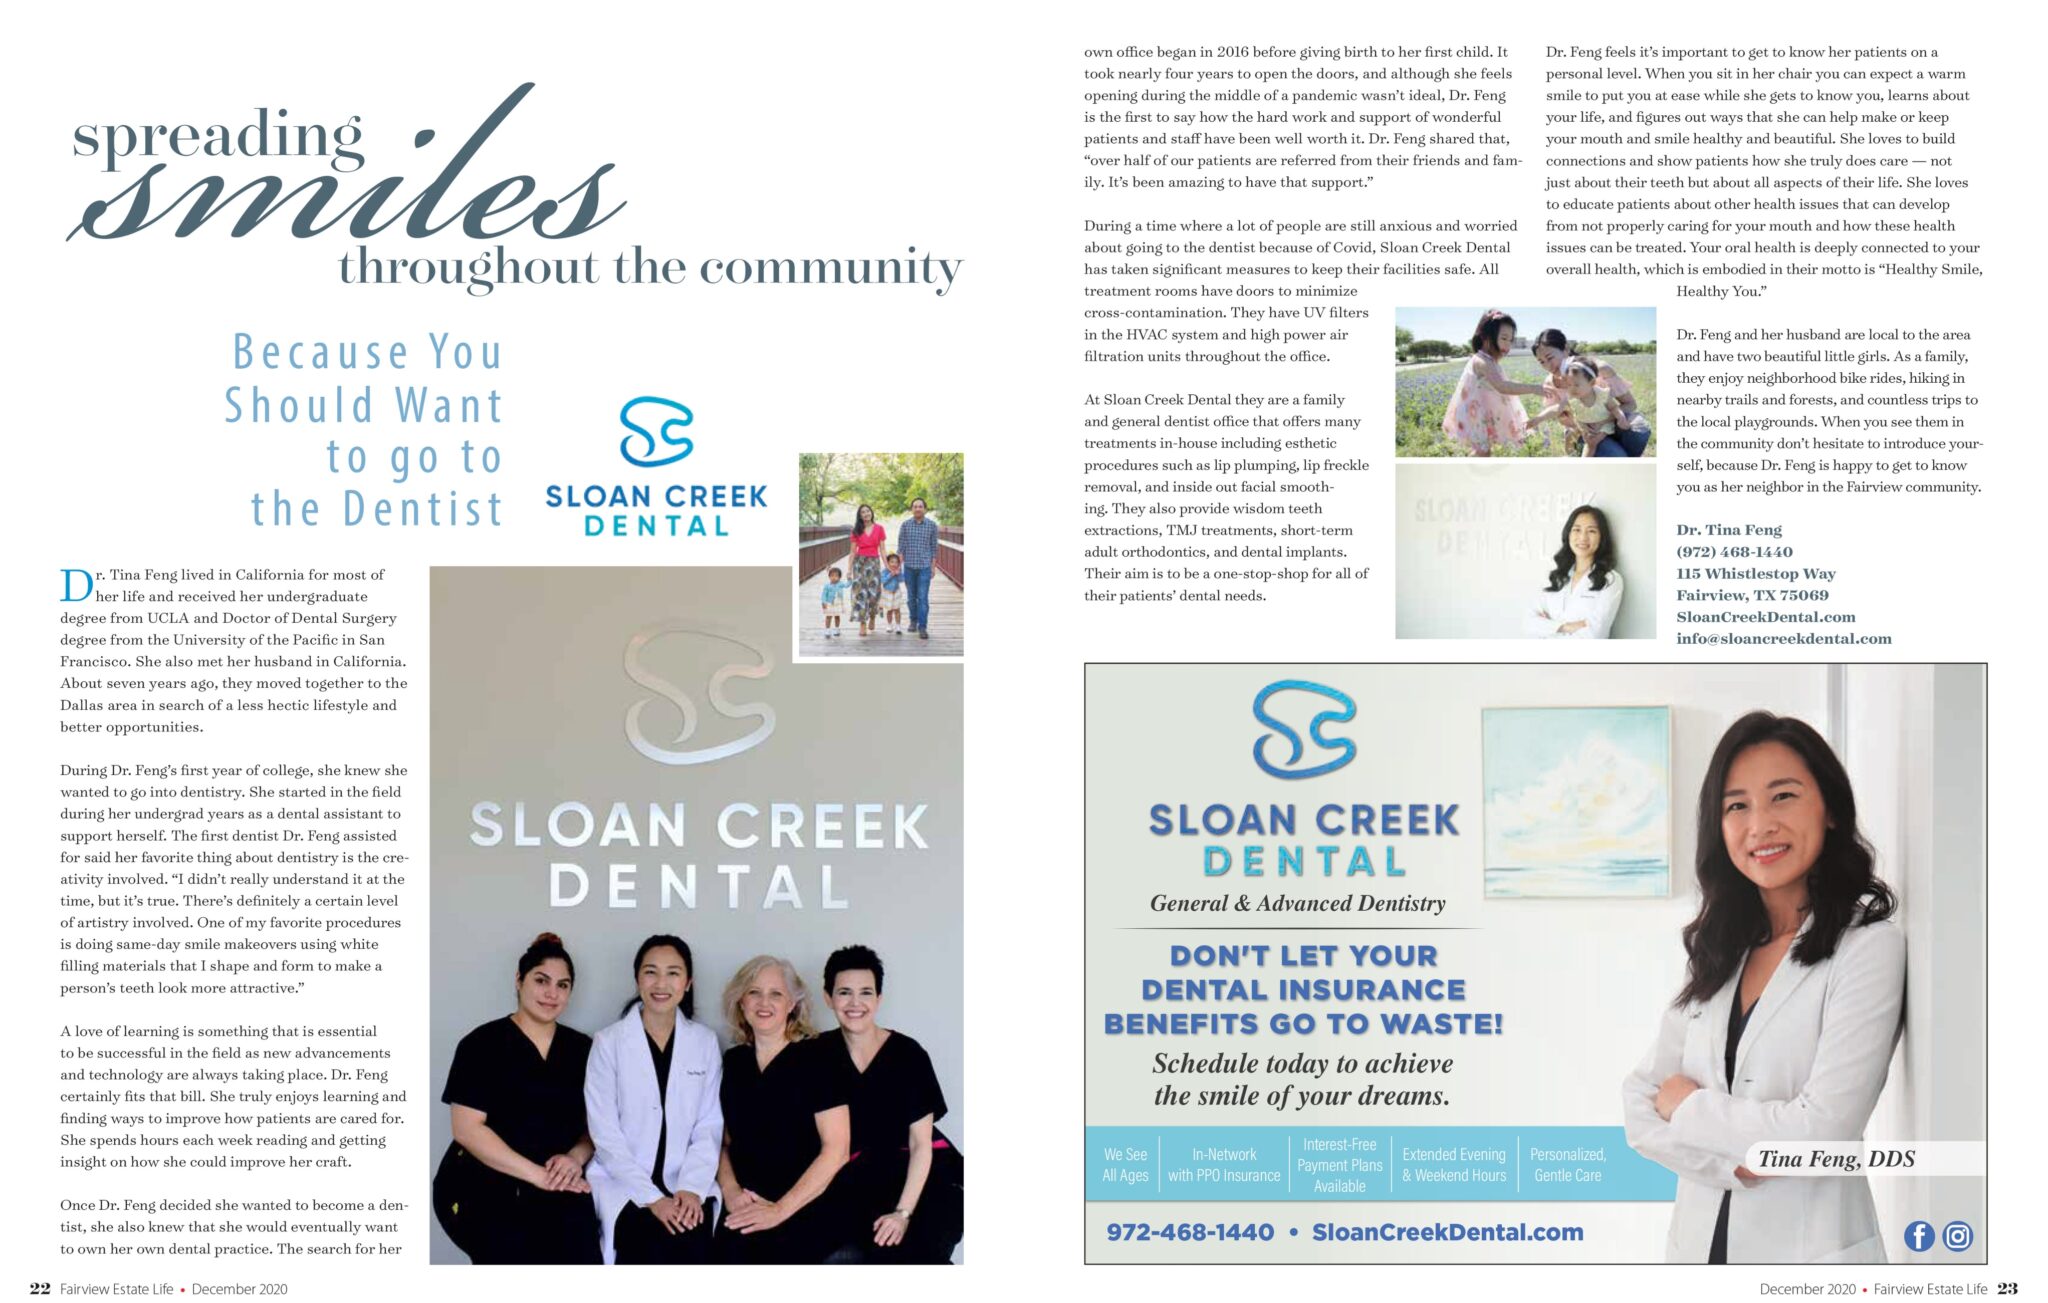 Sloan Creek Dental - Fairview Estate Spotlight